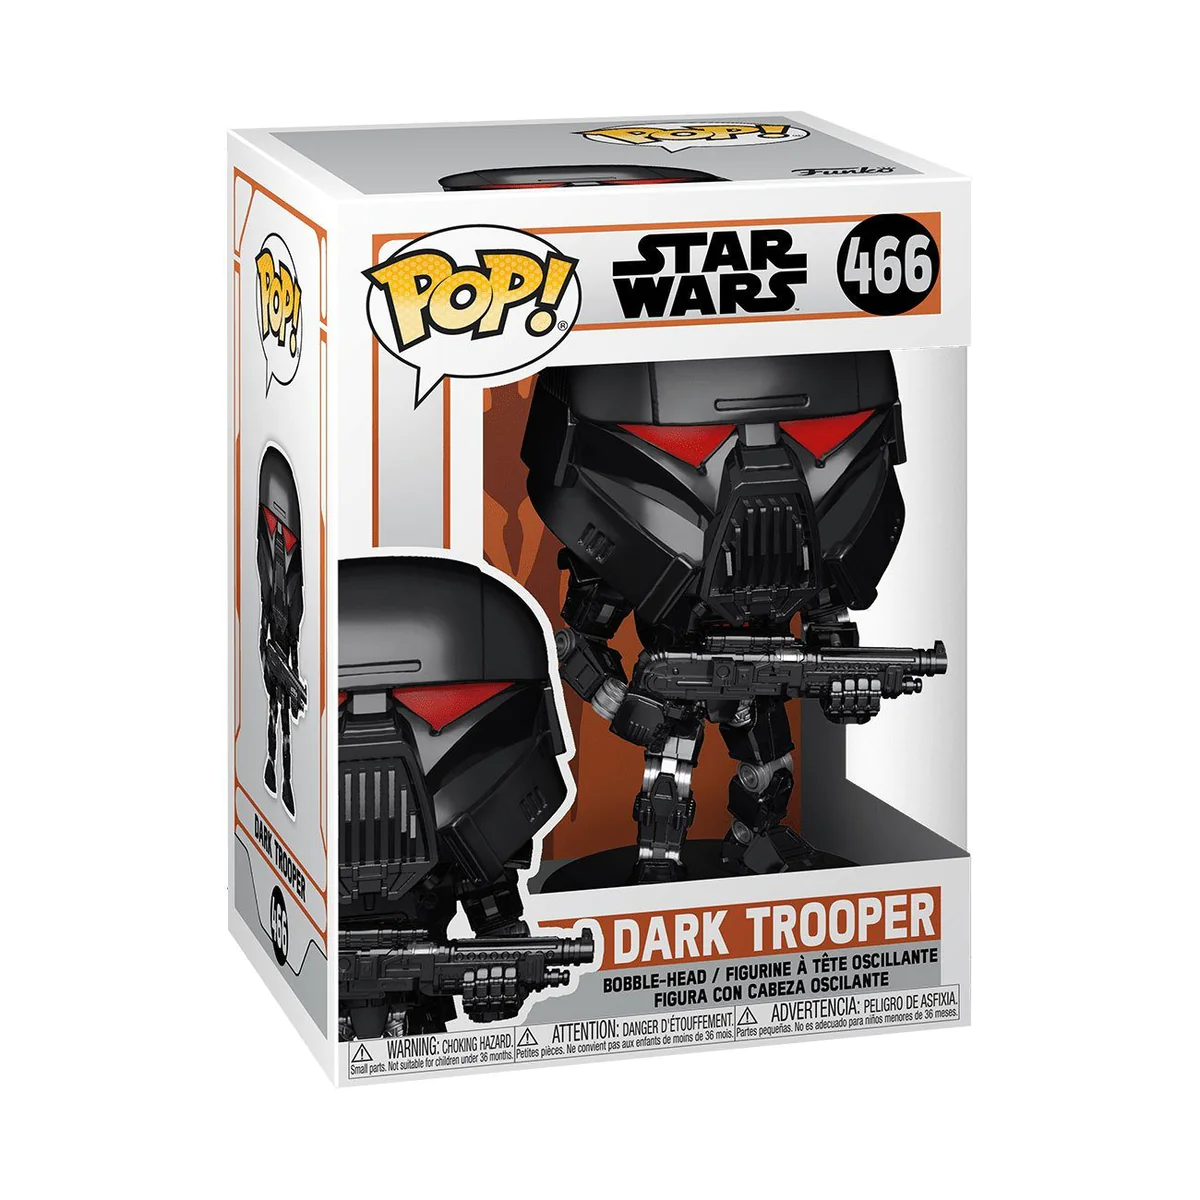 Dark trooper